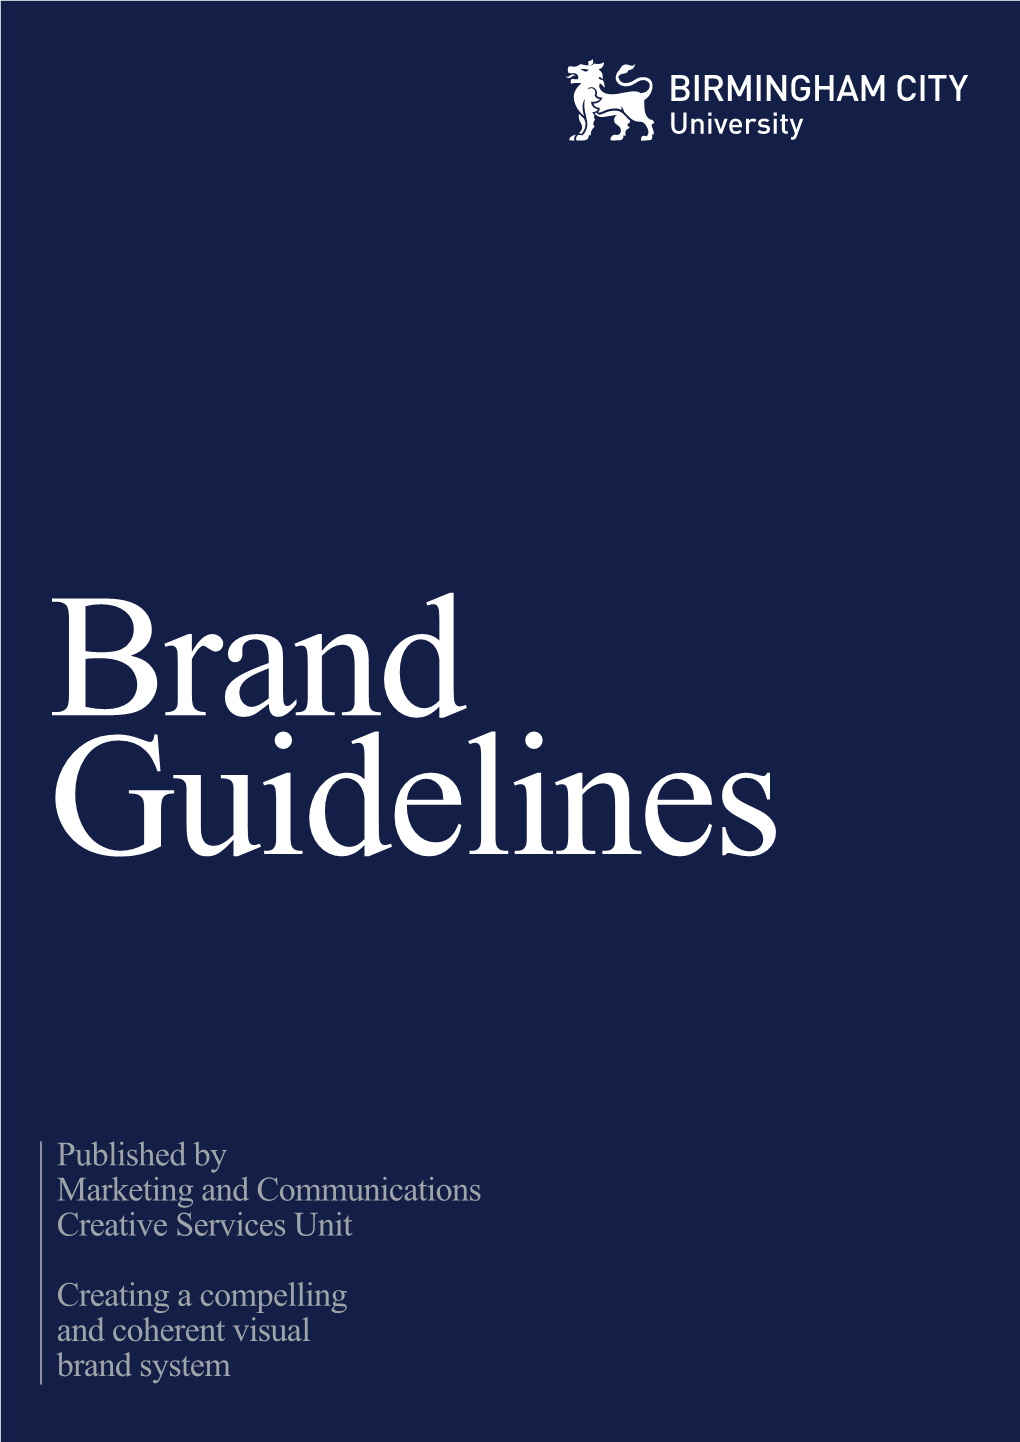 Bcu-Brand-Guidelines.Pdf